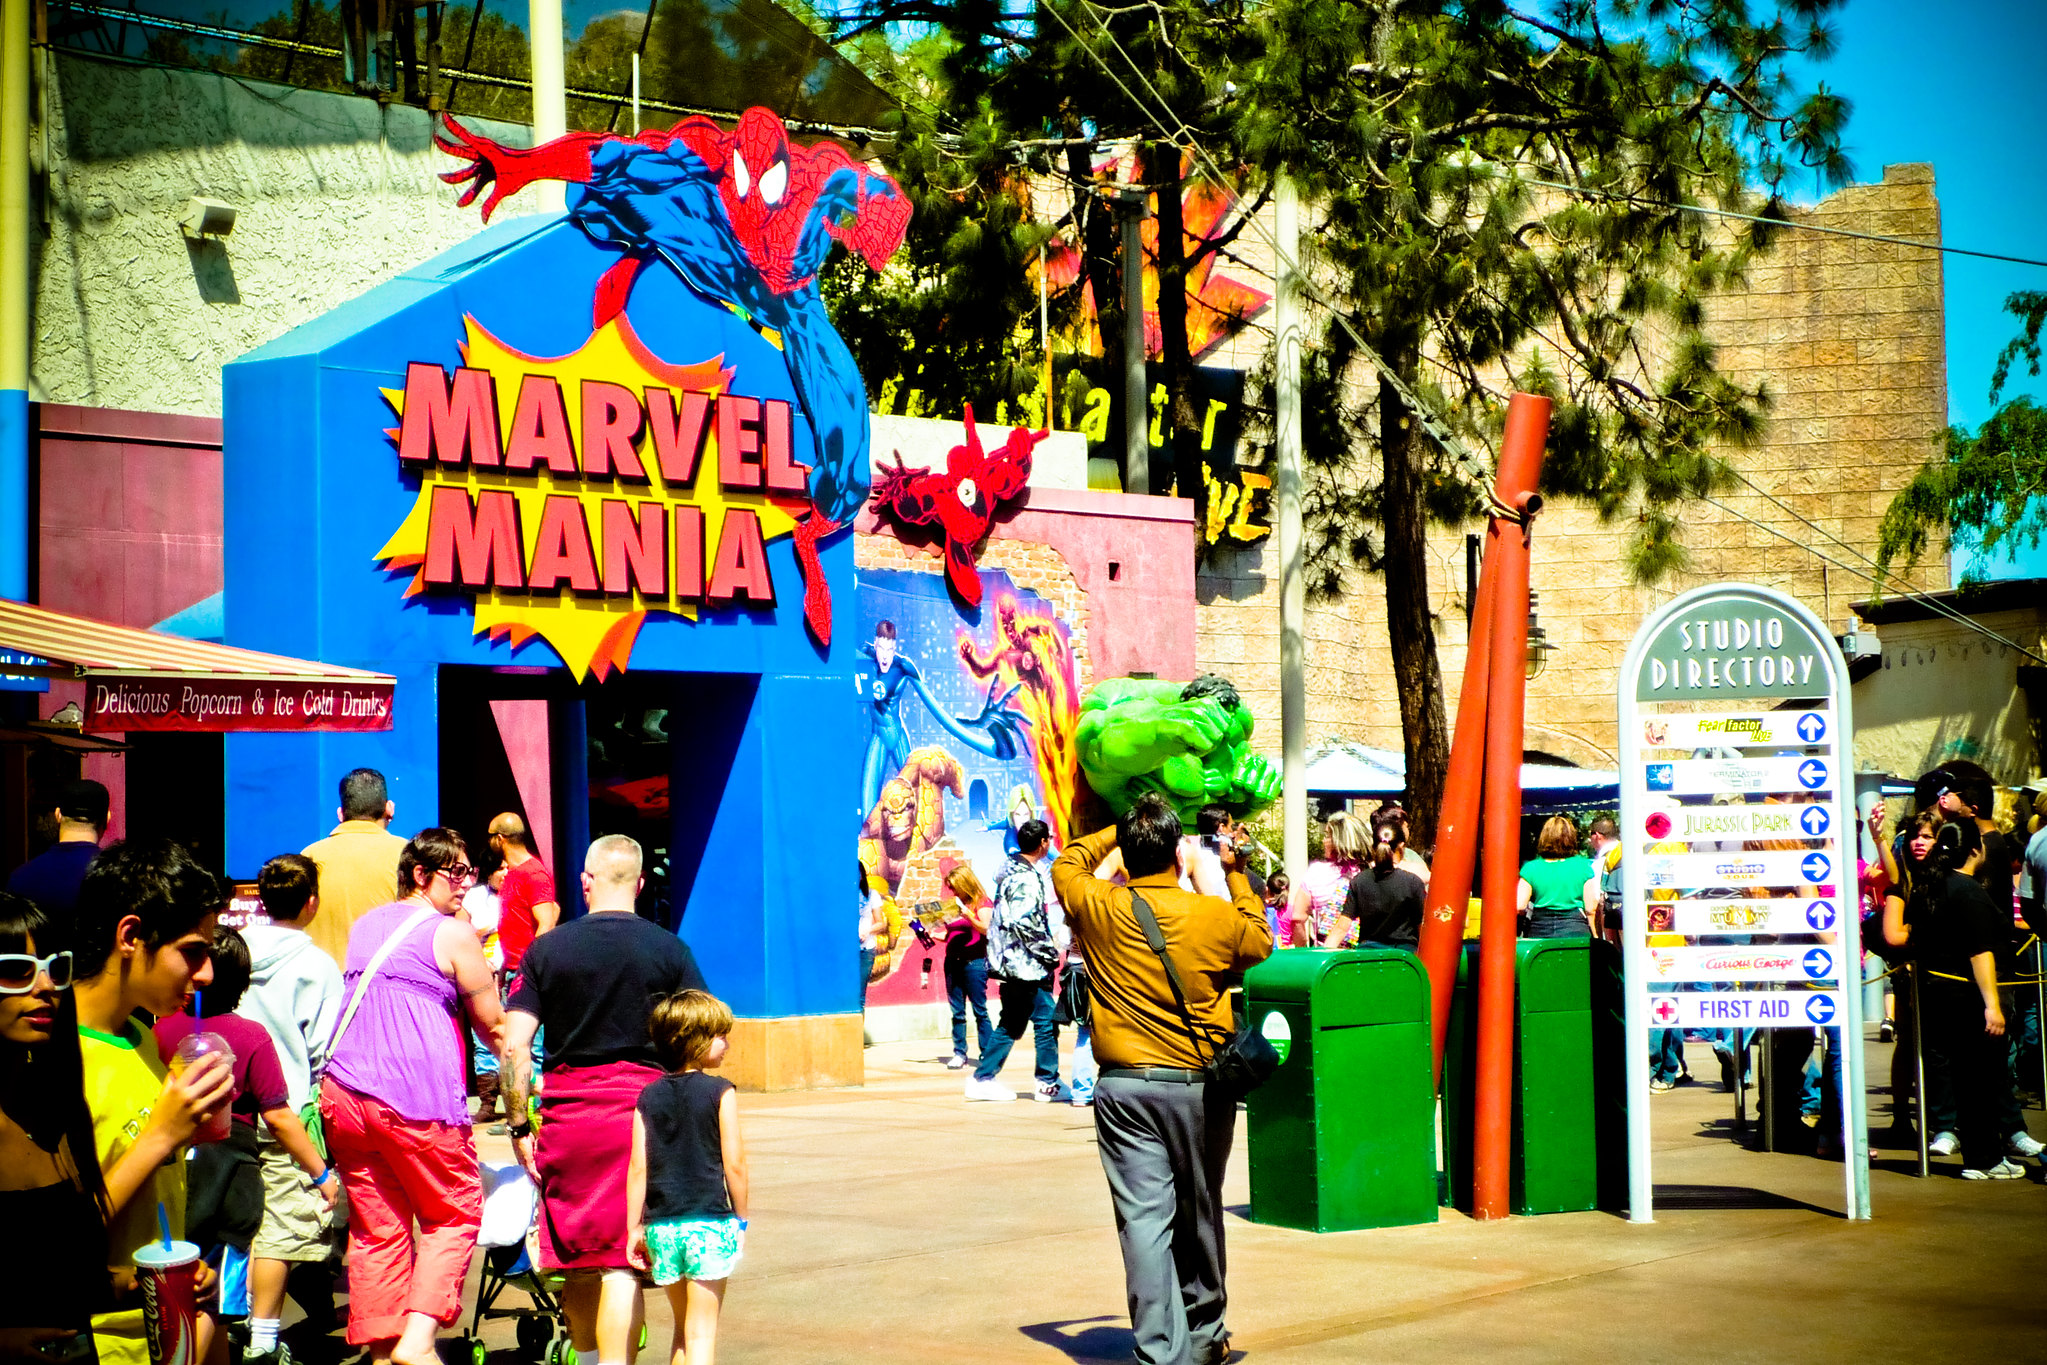 Marvel Mania at Universal Studios Hollywood